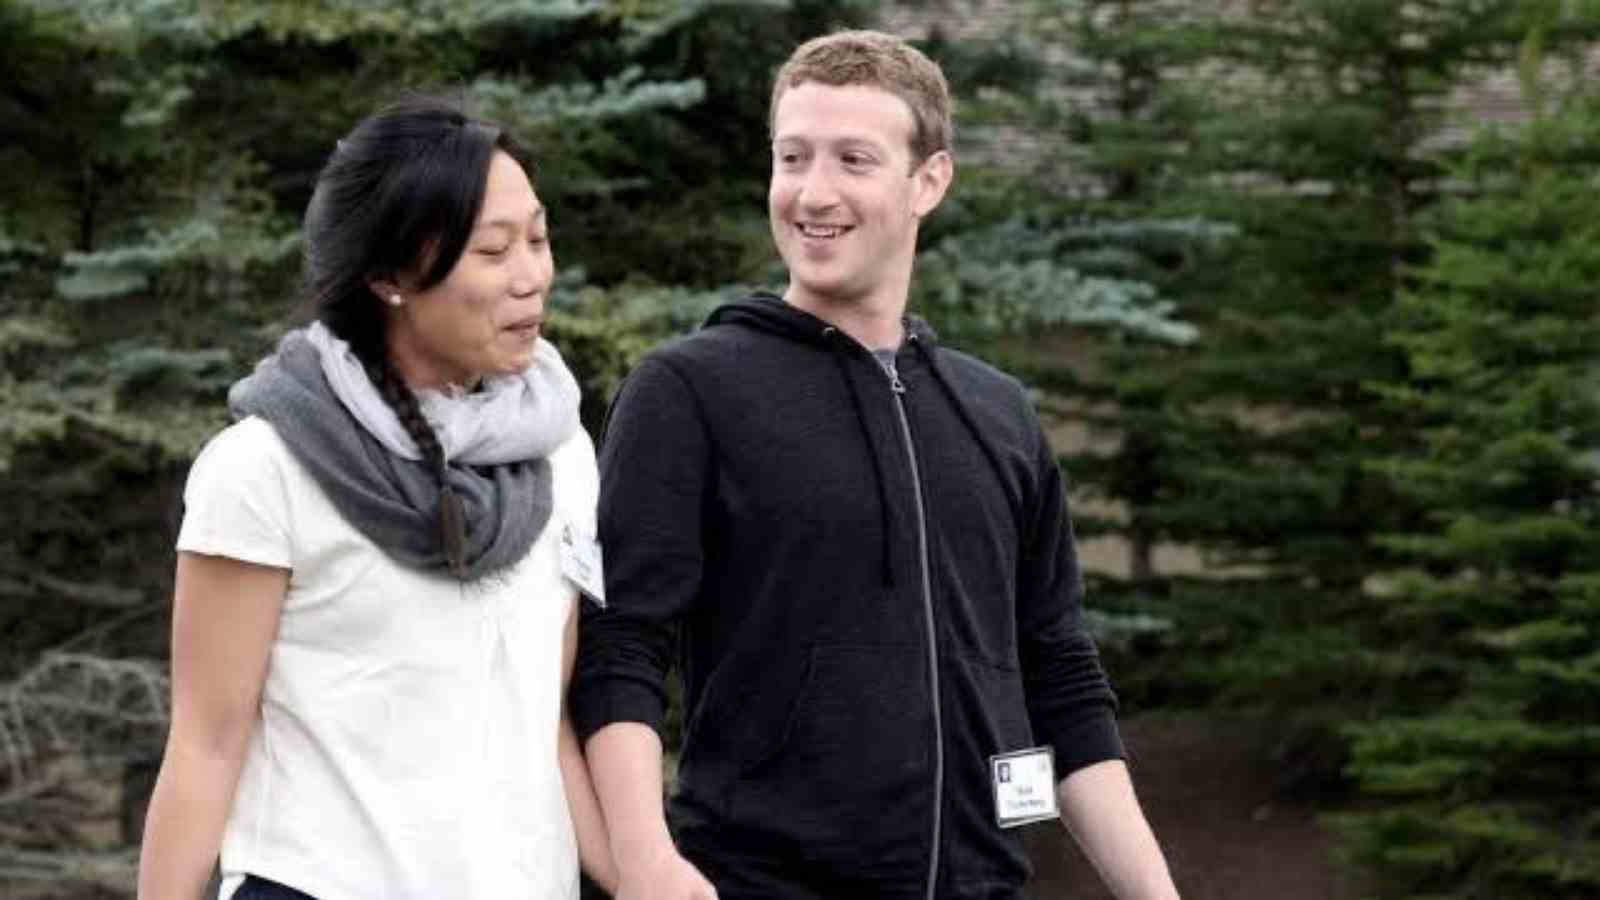 Mark Zuckerberg's neighbors were quite pissed at him